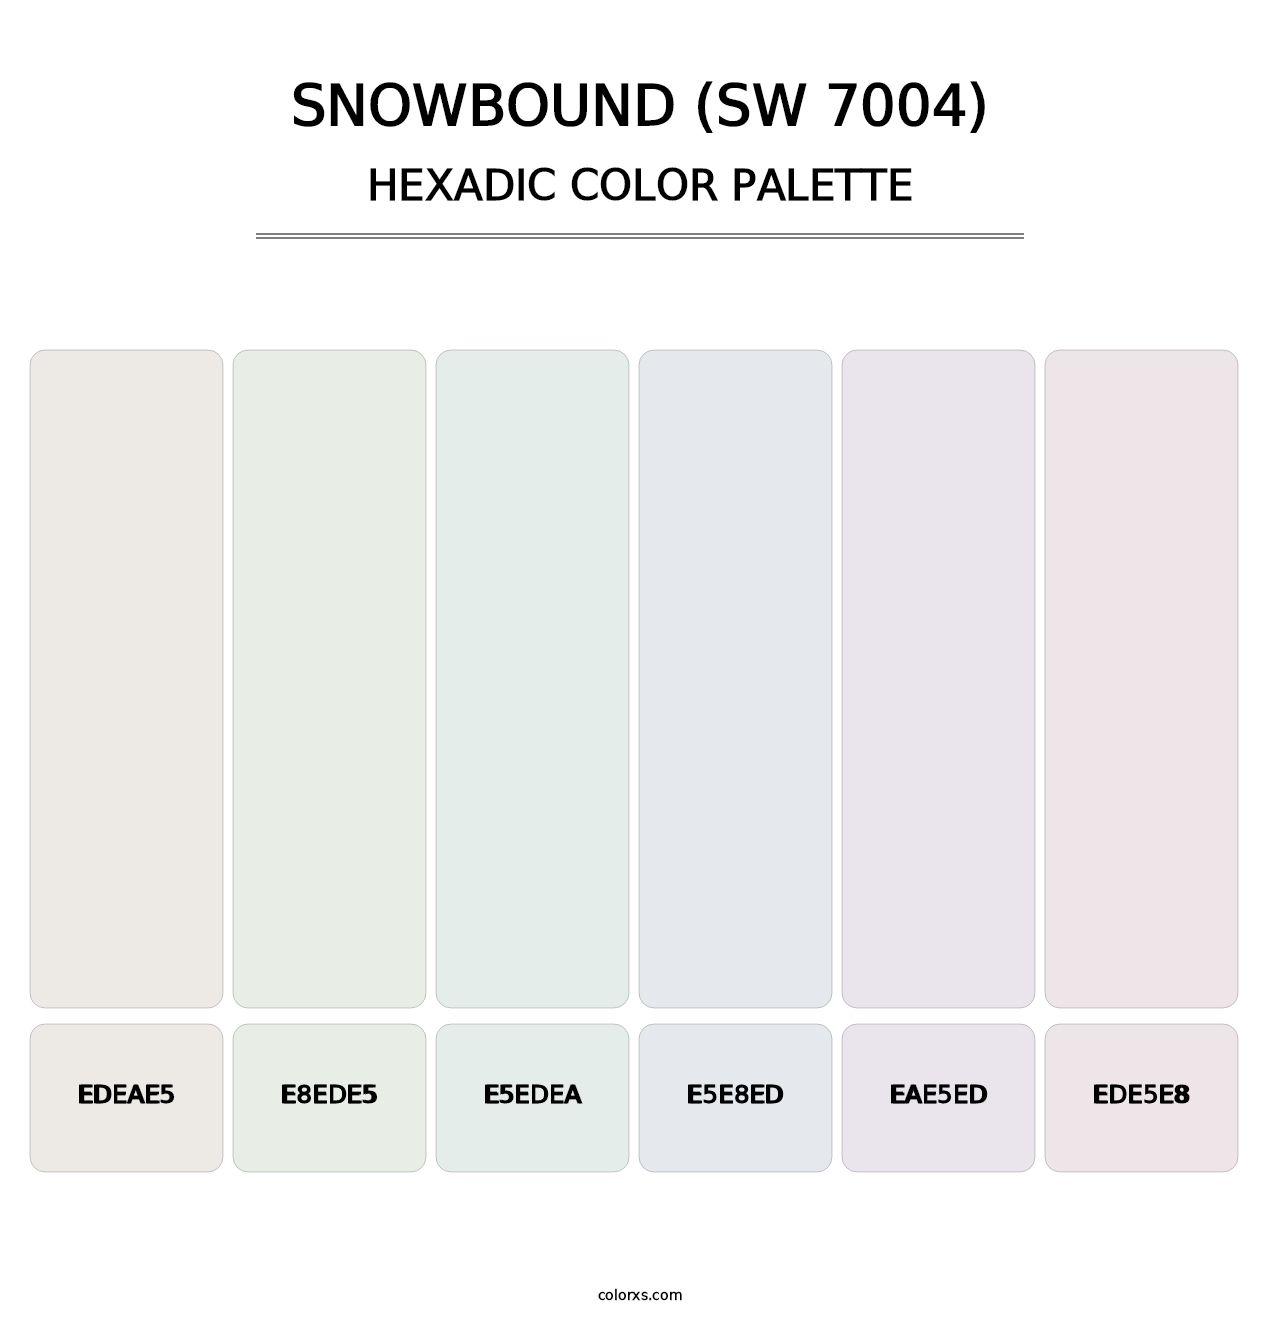 Snowbound (SW 7004) - Hexadic Color Palette